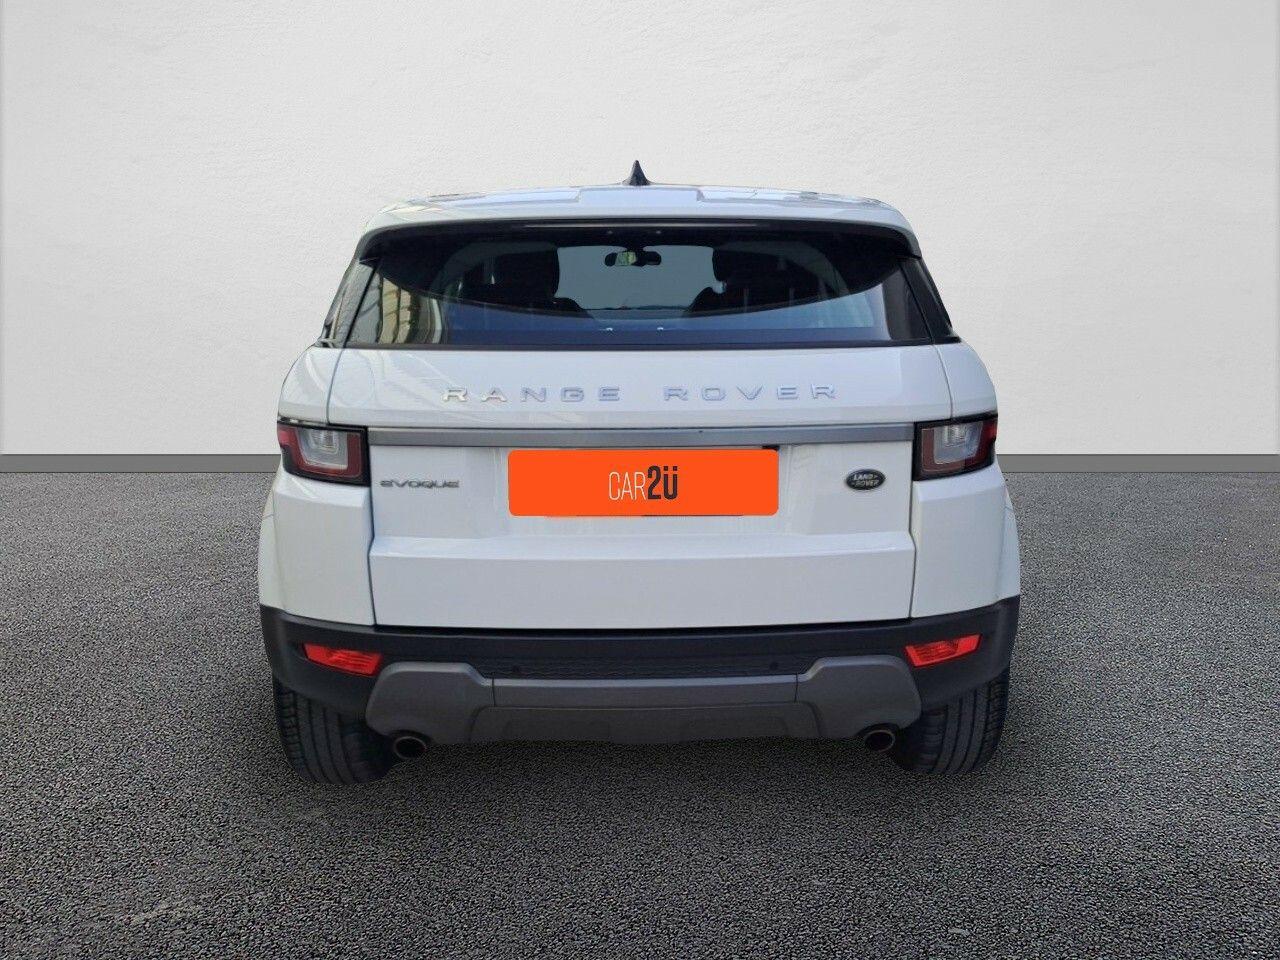 Foto Land-Rover Range Rover Evoque 15